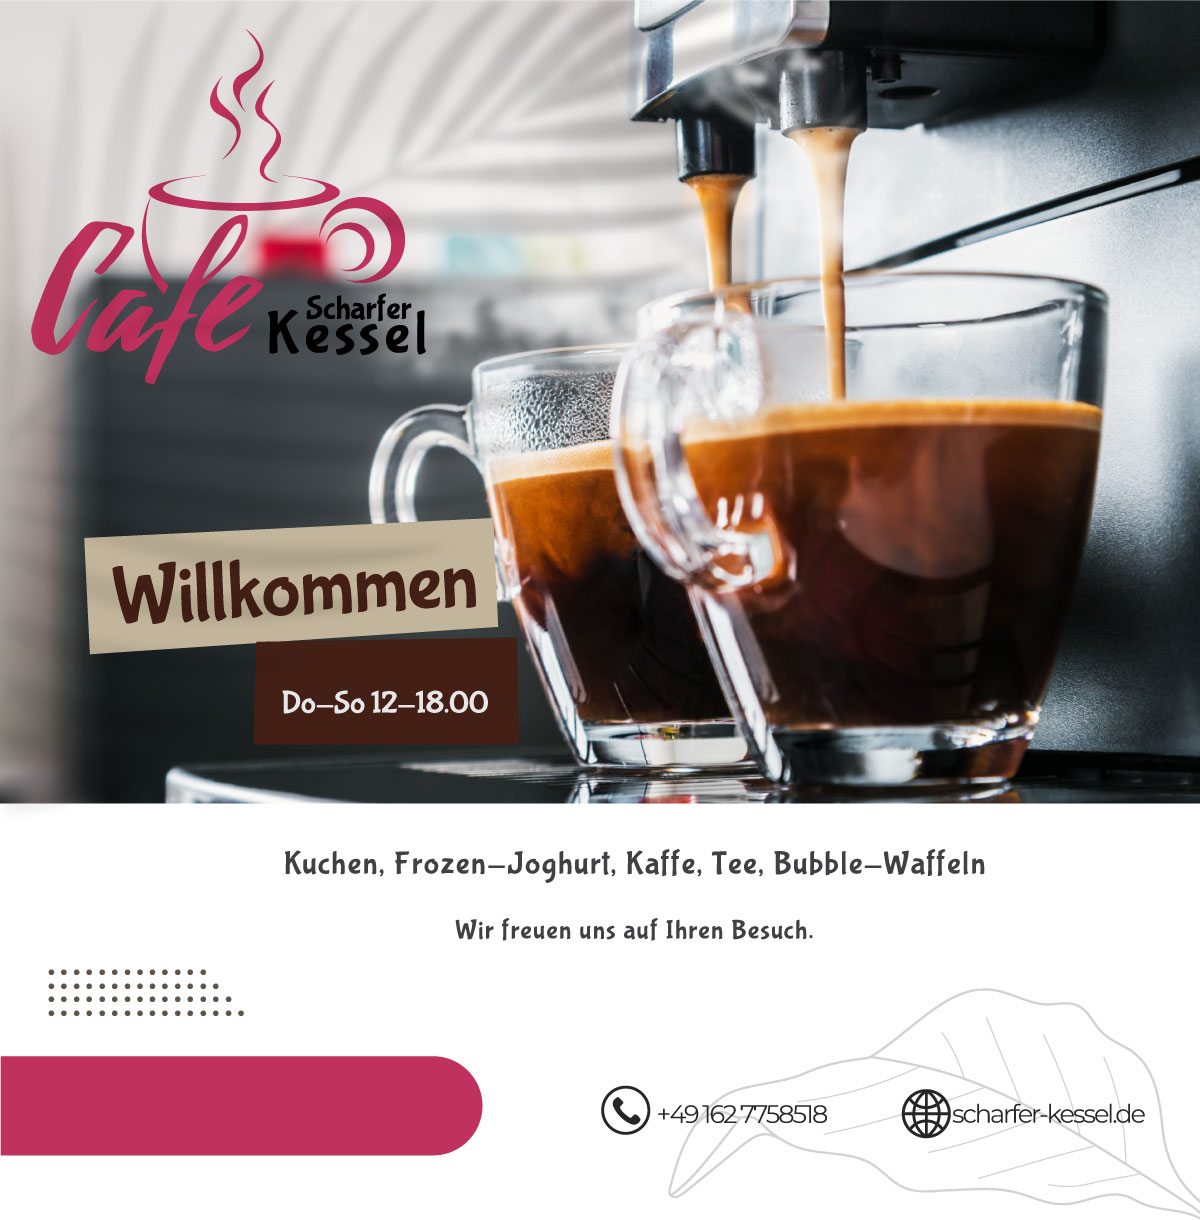 coffee_ii Restaurant & Pension "Scharfer Kessel" | Impressum